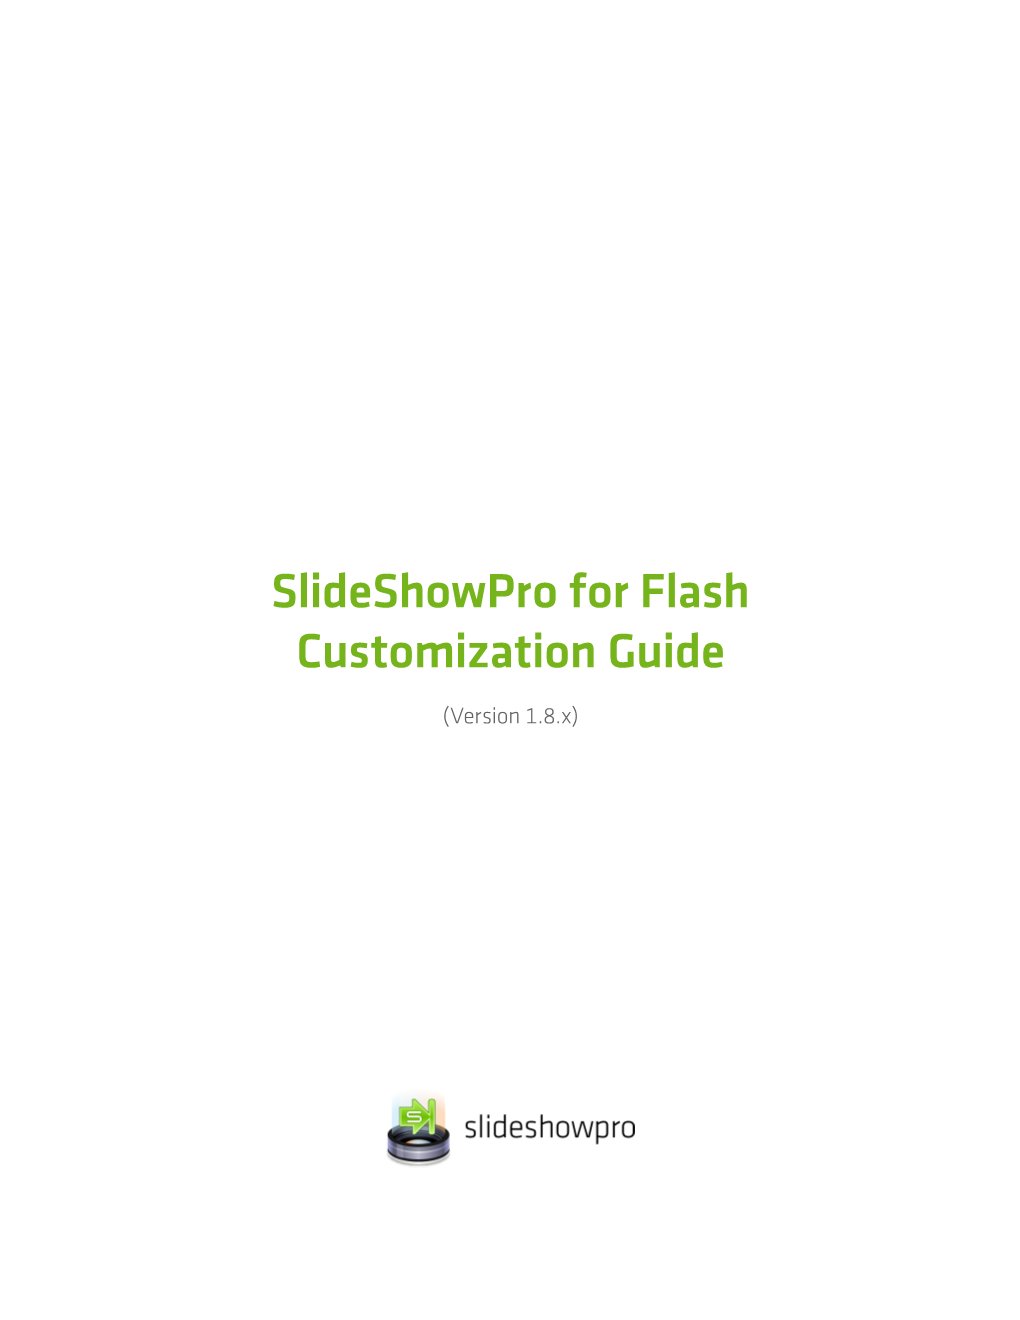 Slideshowpro for Flash Customization Guide